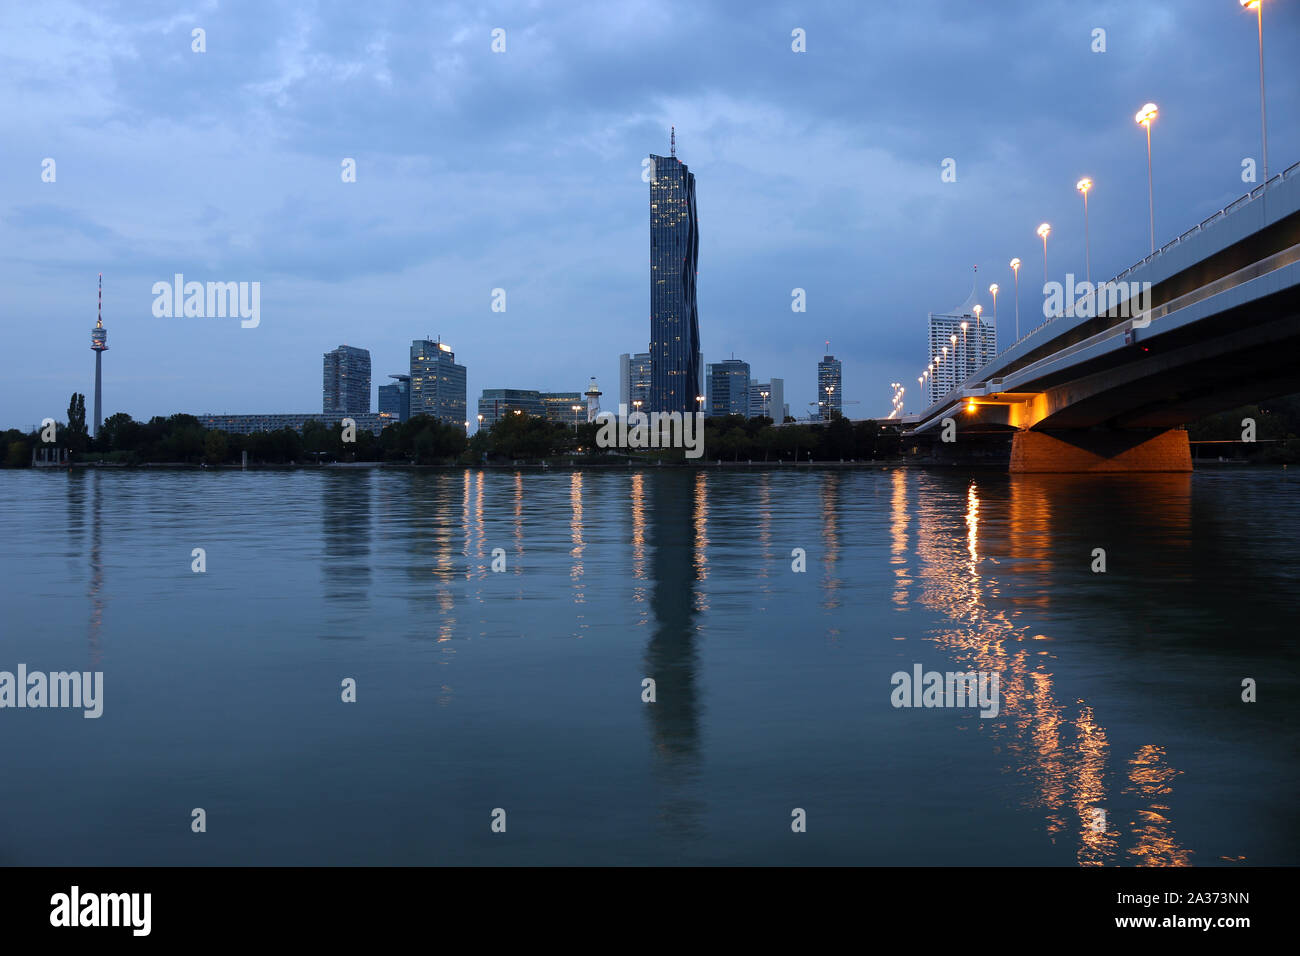 Donaucity Vienna skyline on the Danube river at night Stock Photo